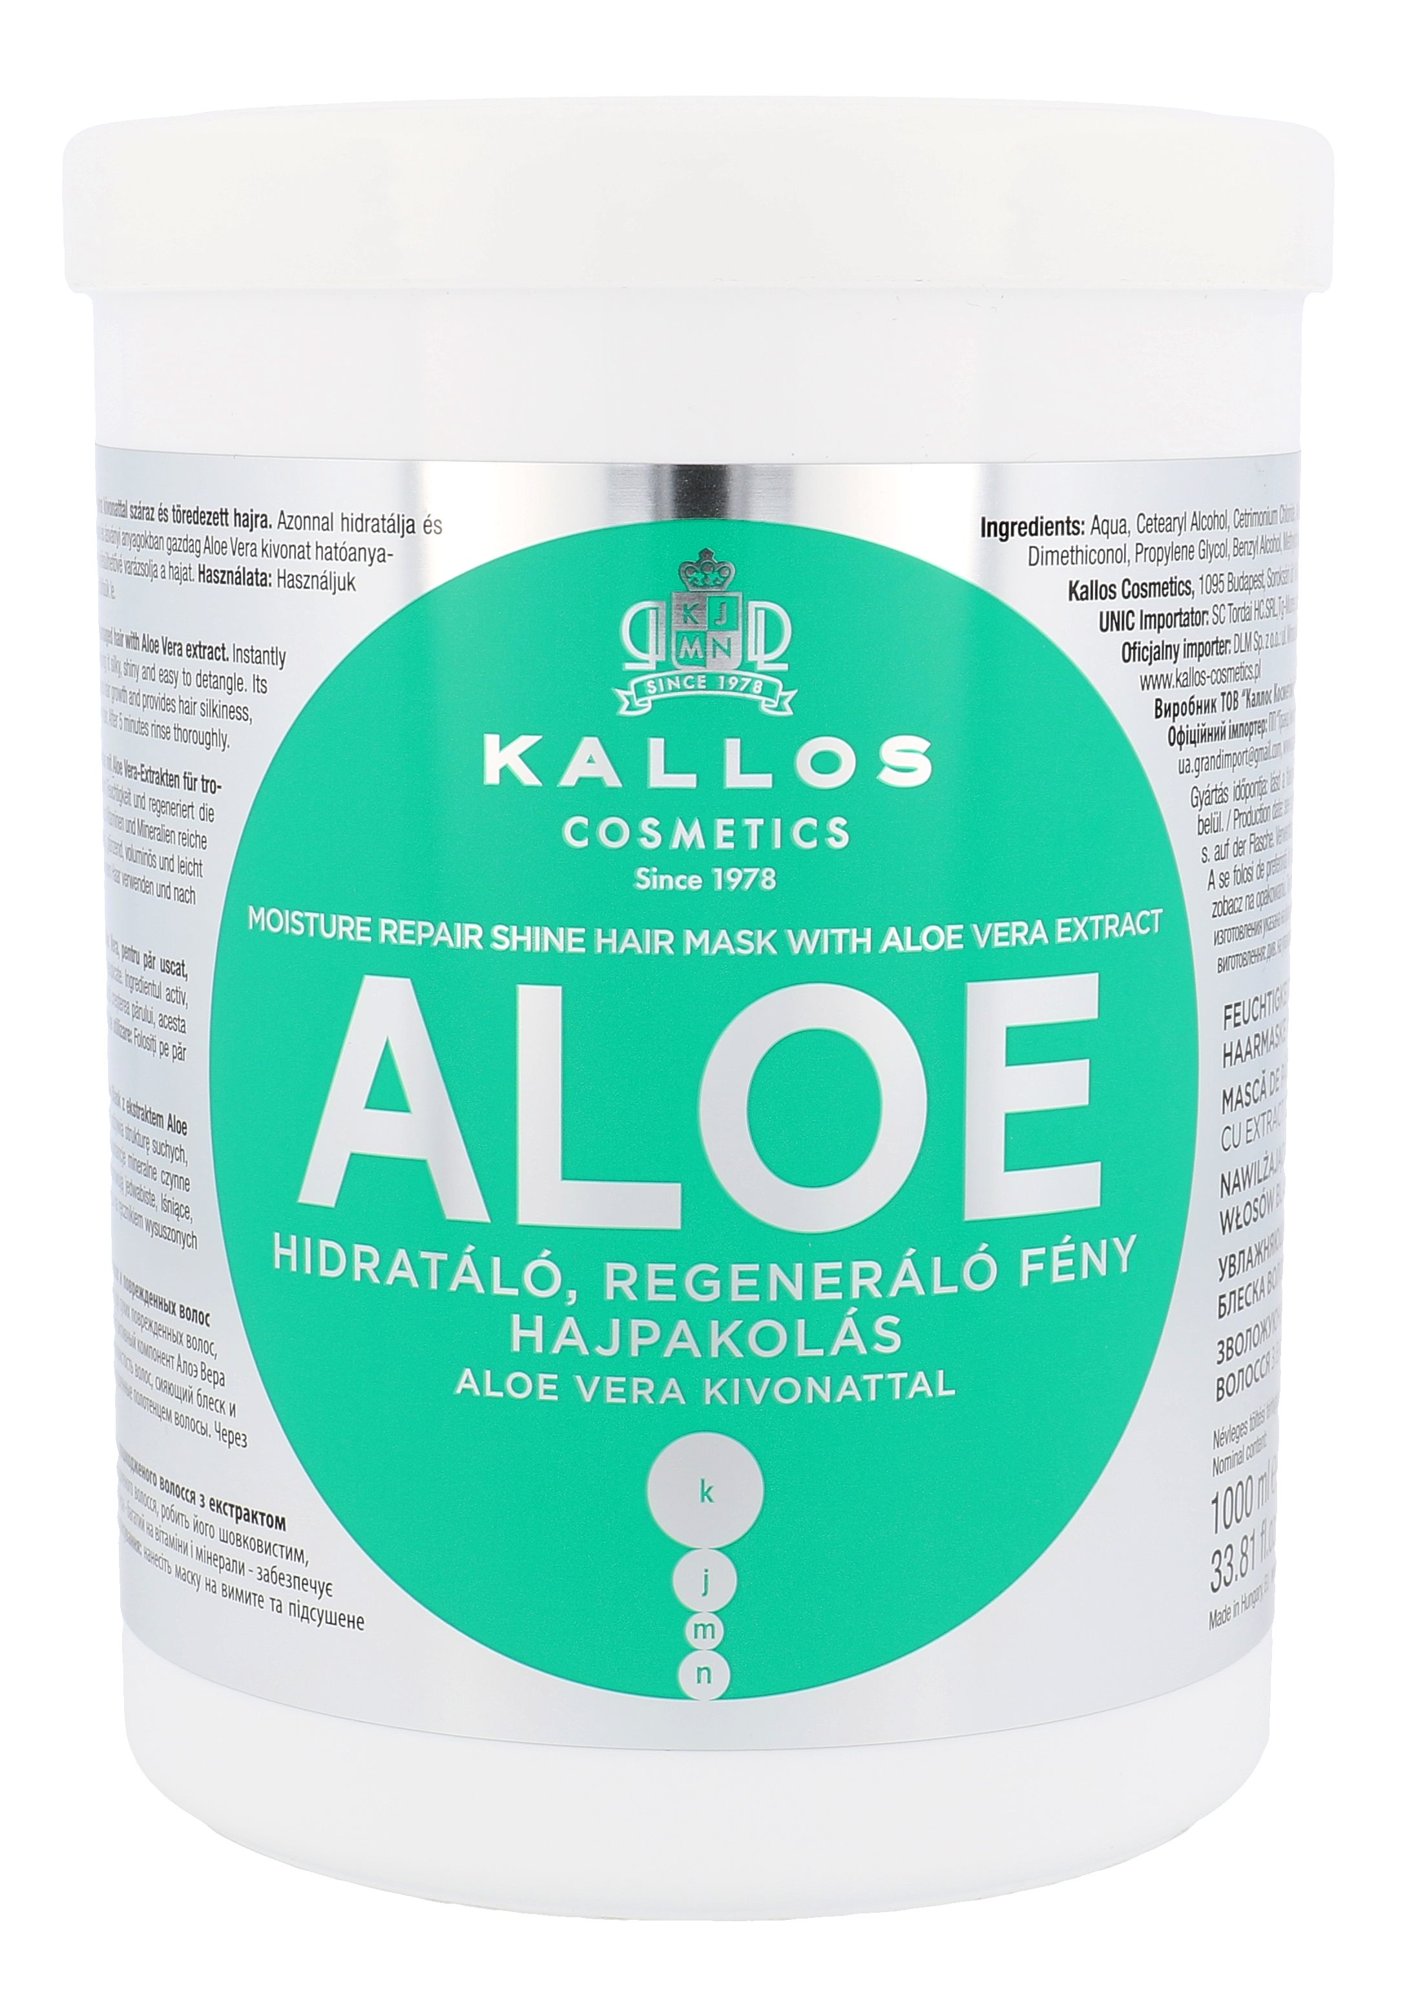 Kallos Aloe Vera Moisture Repair Shine Hair Mask